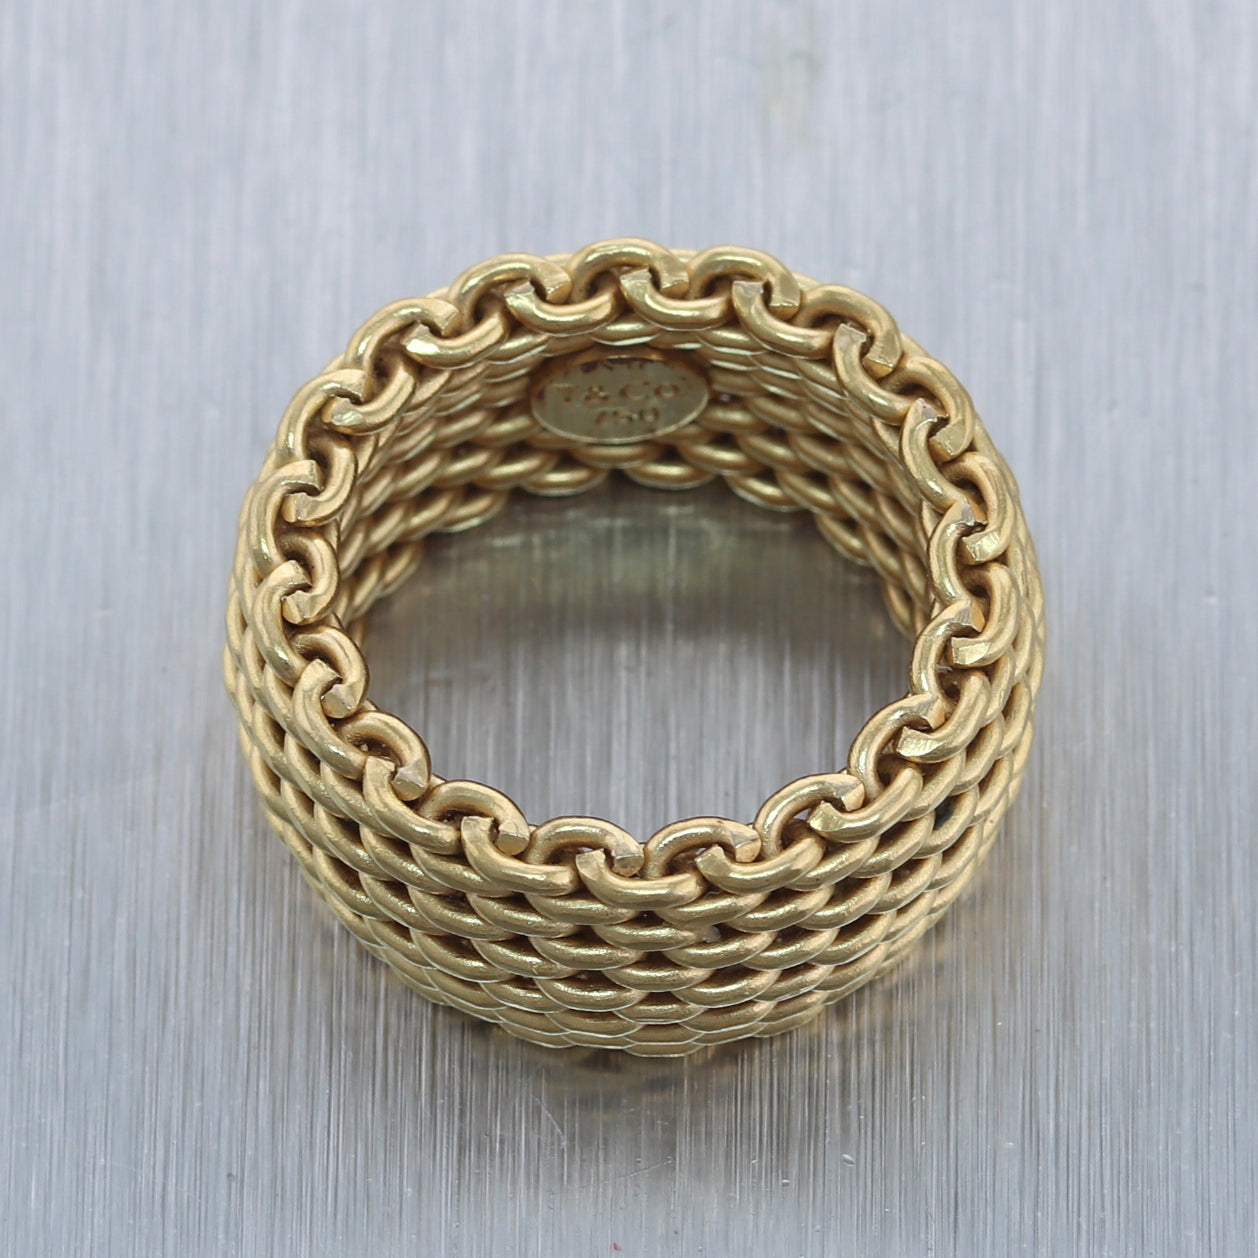 Tiffany & Co. Somerset Narrow Mesh Ring in 18k Rose Gold - 6 1/2  (PB1021289) | eBay